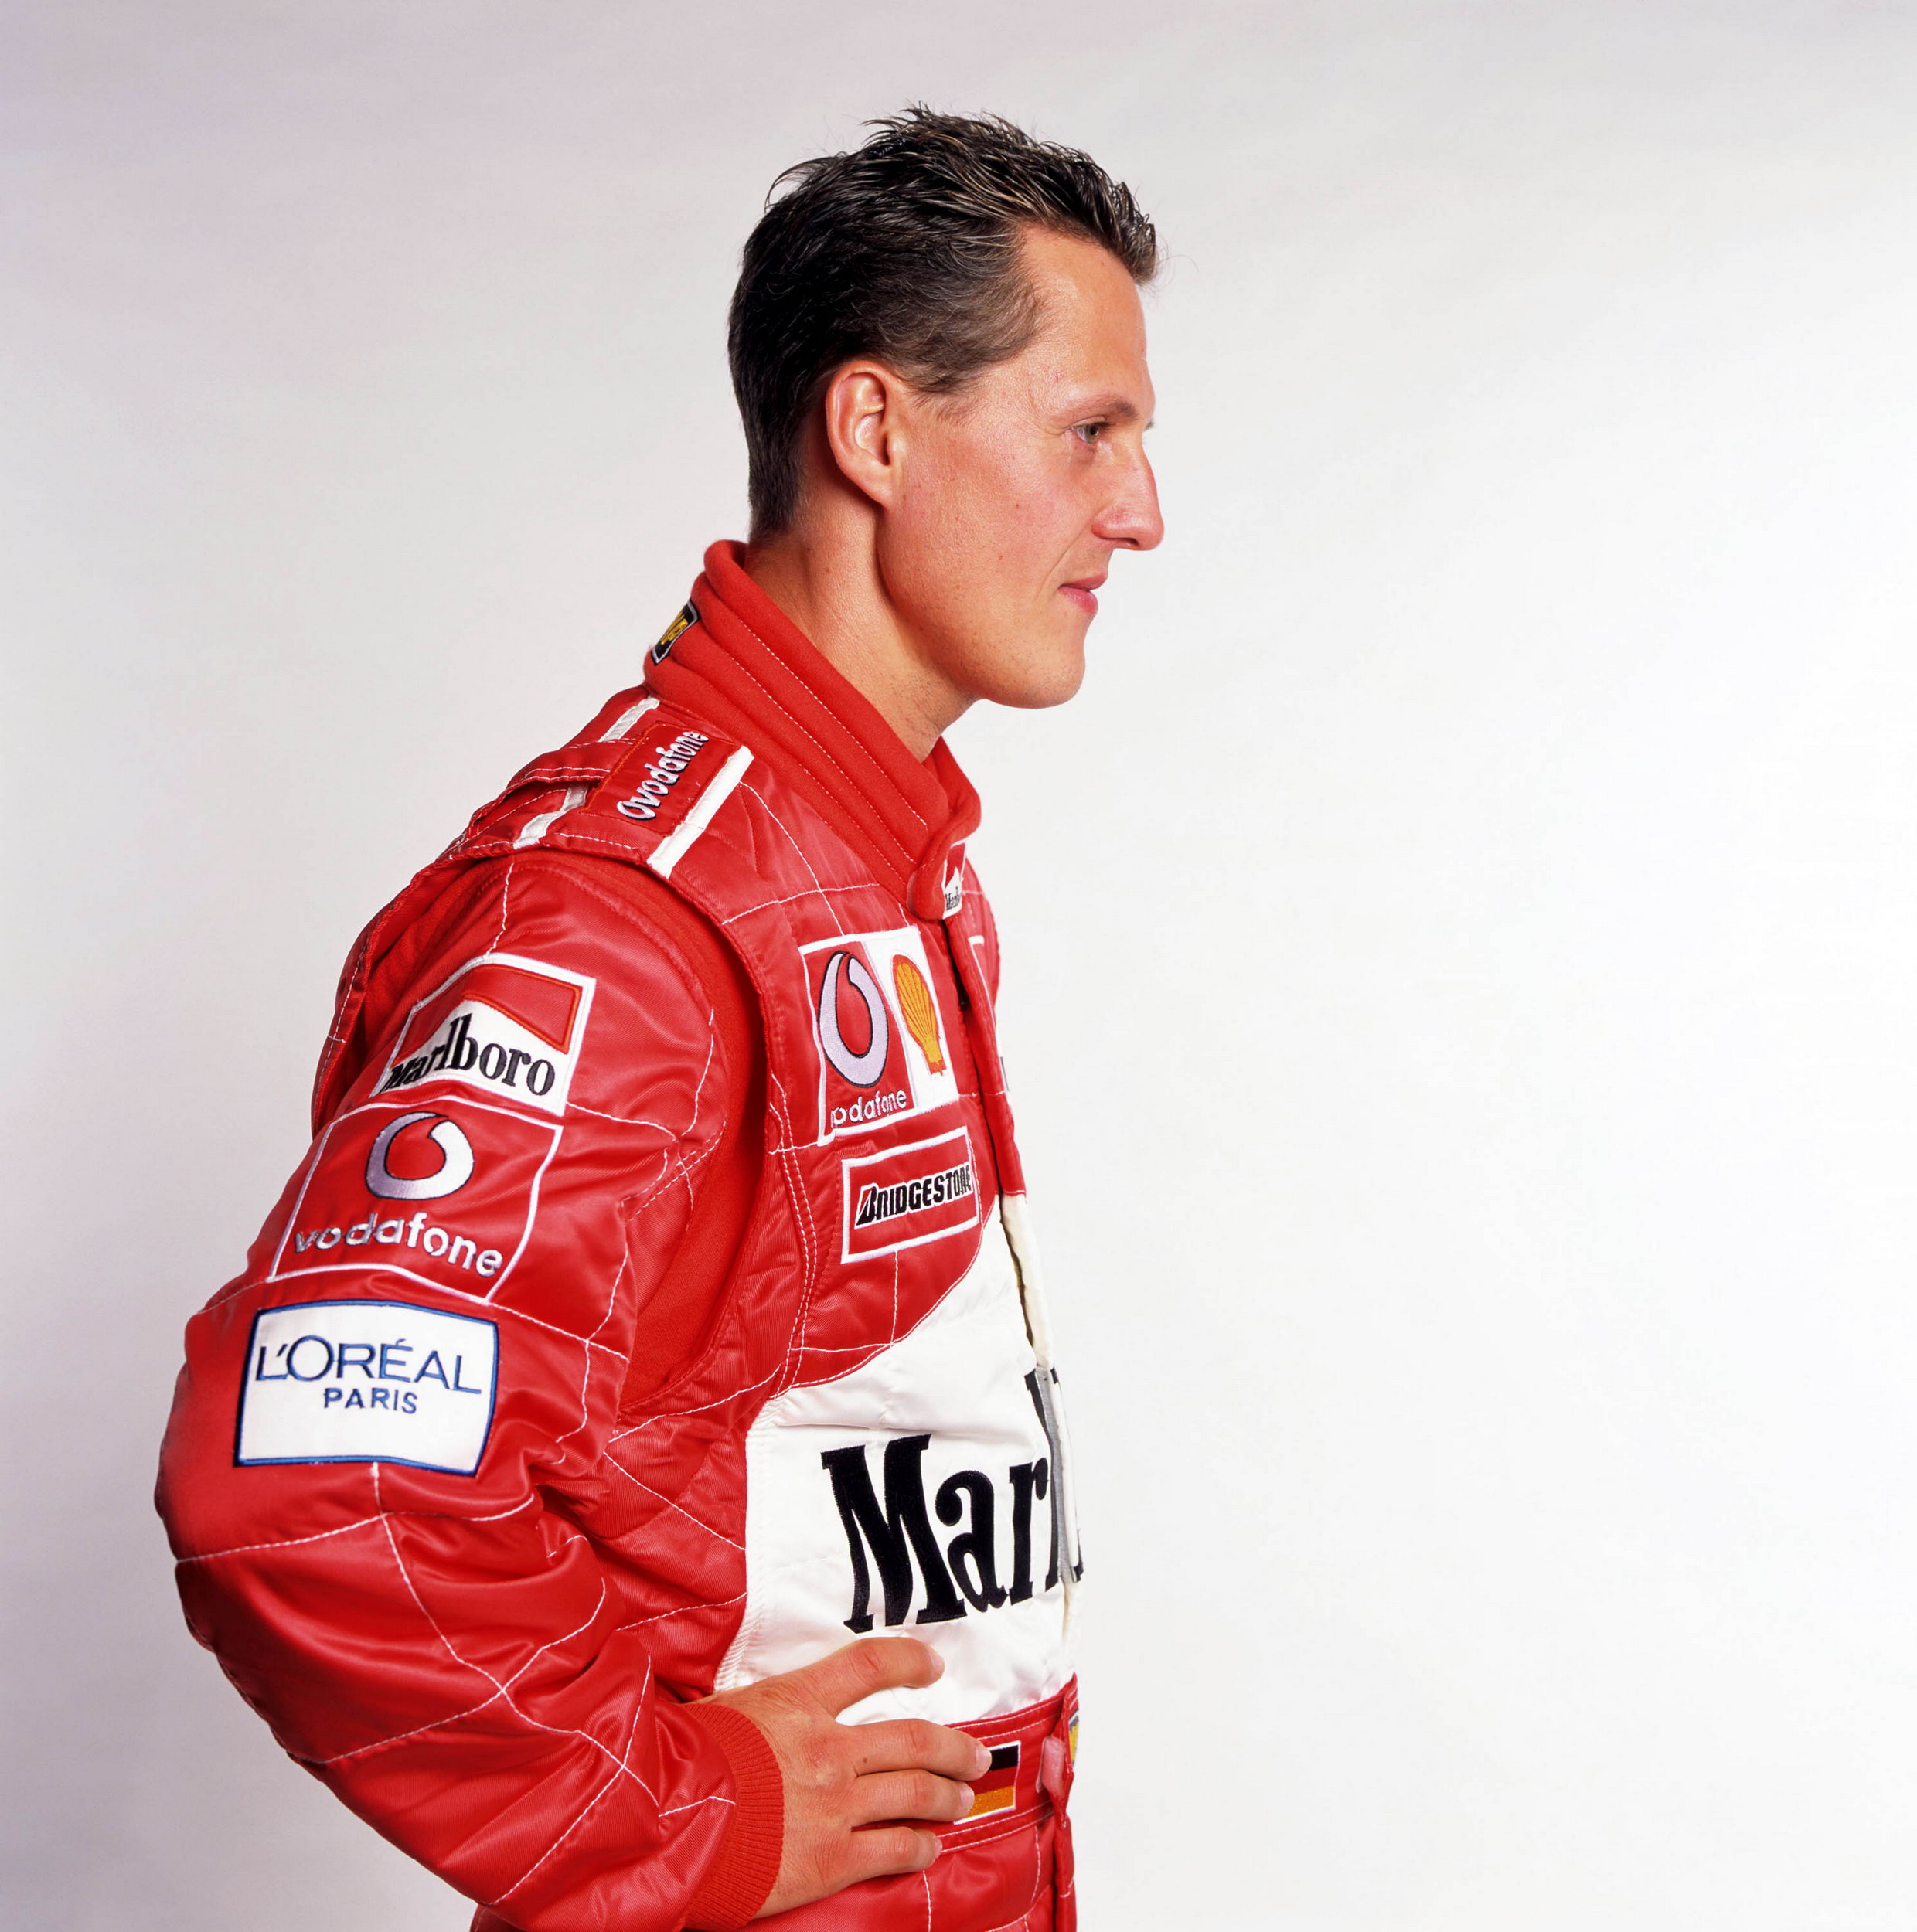 Michael Schumacher photo 9 of 23 pics, wallpaper - photo #245622 - ThePlace2